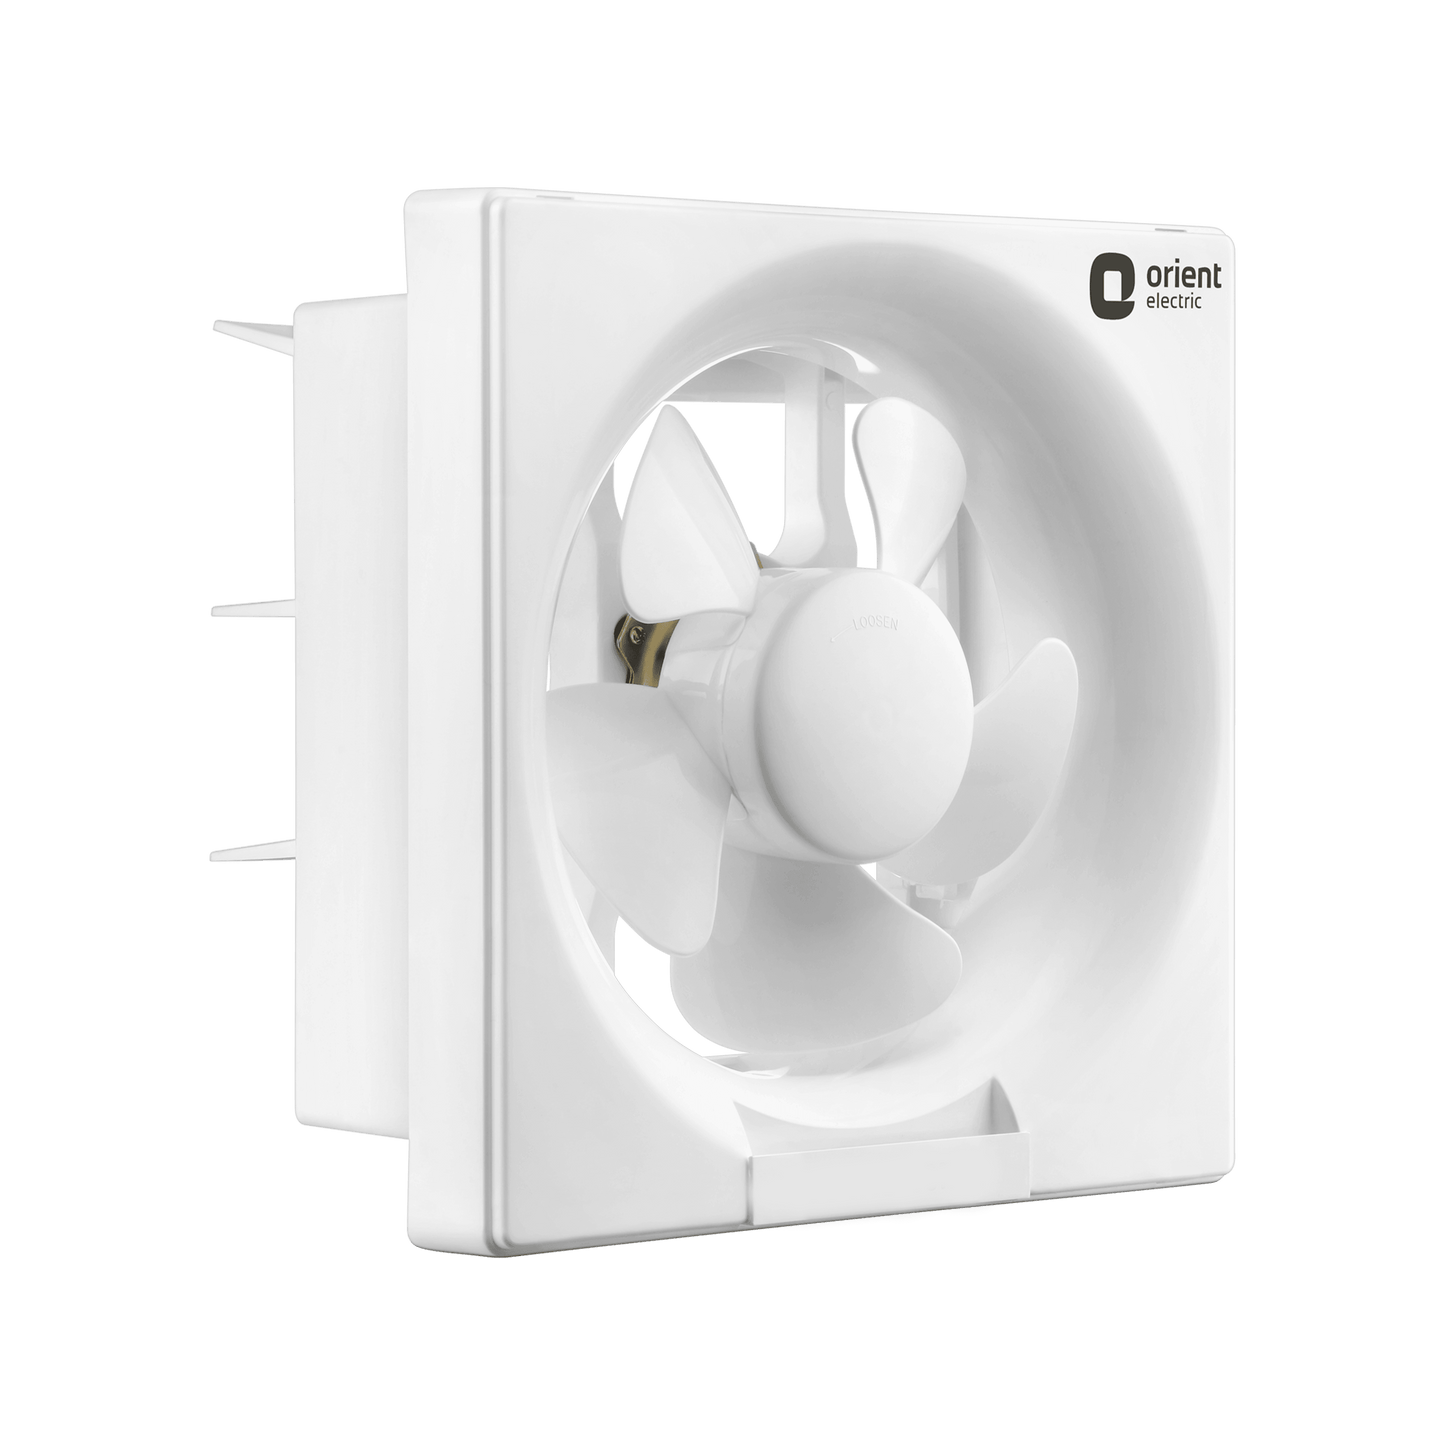 Ventilator DX 150mm Small Exhaust Fan for Bathroom